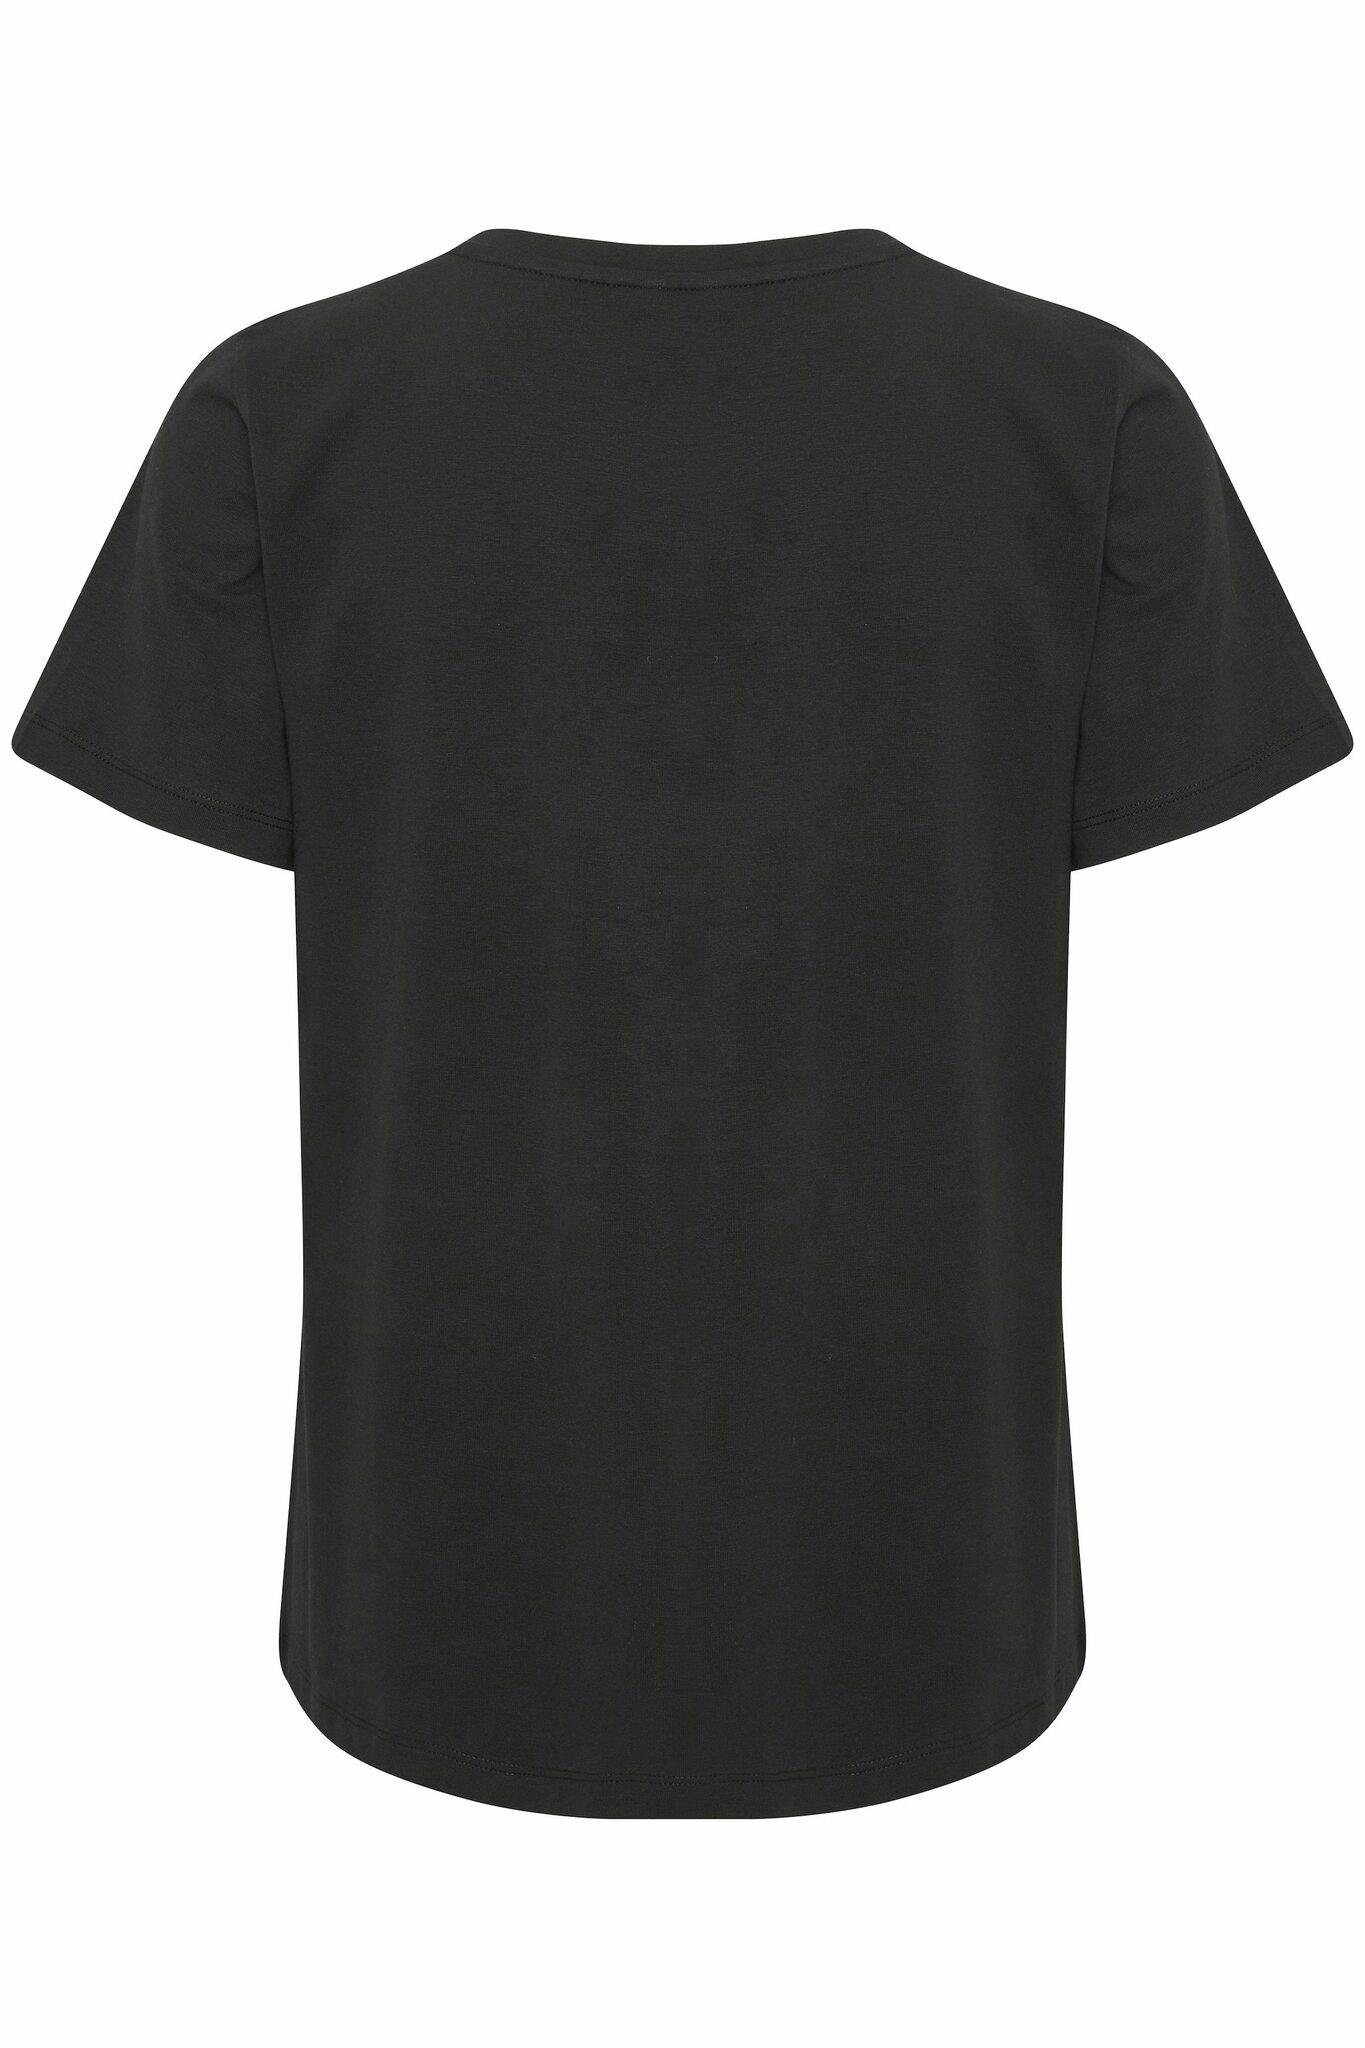 Culture - CUgith t-shirt, svart